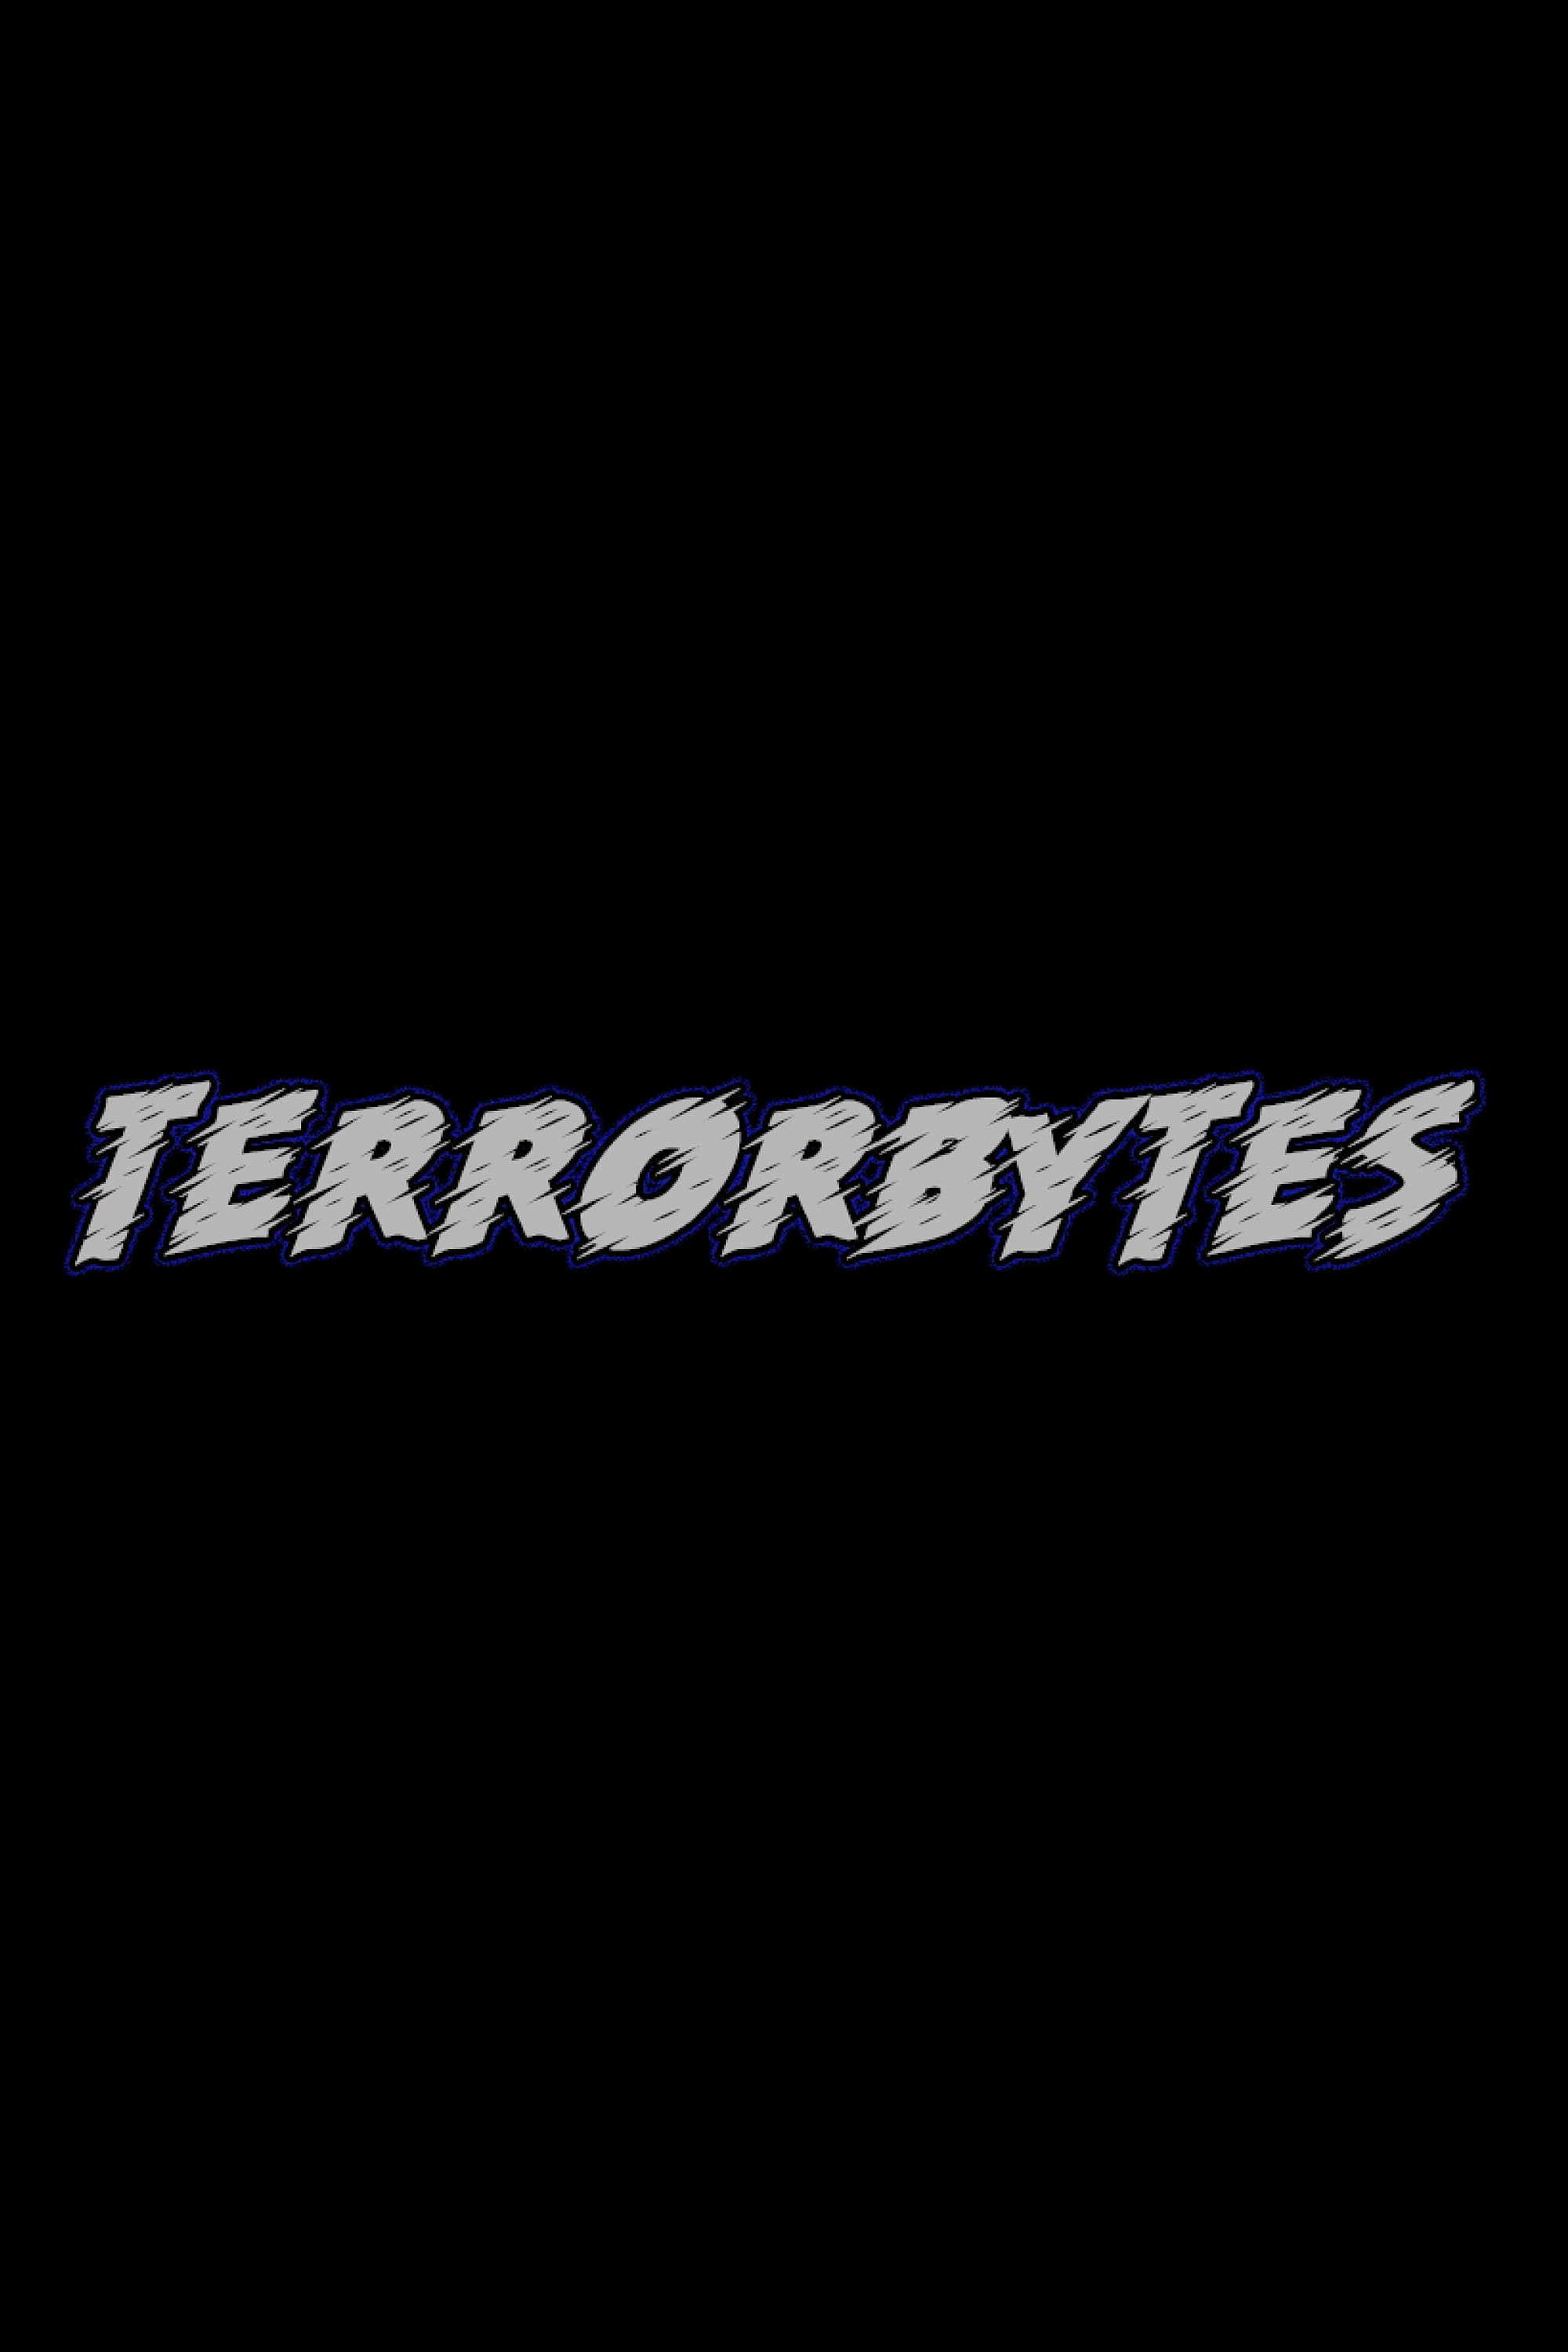 TerrorBytes: The Evolution of Horror Gaming